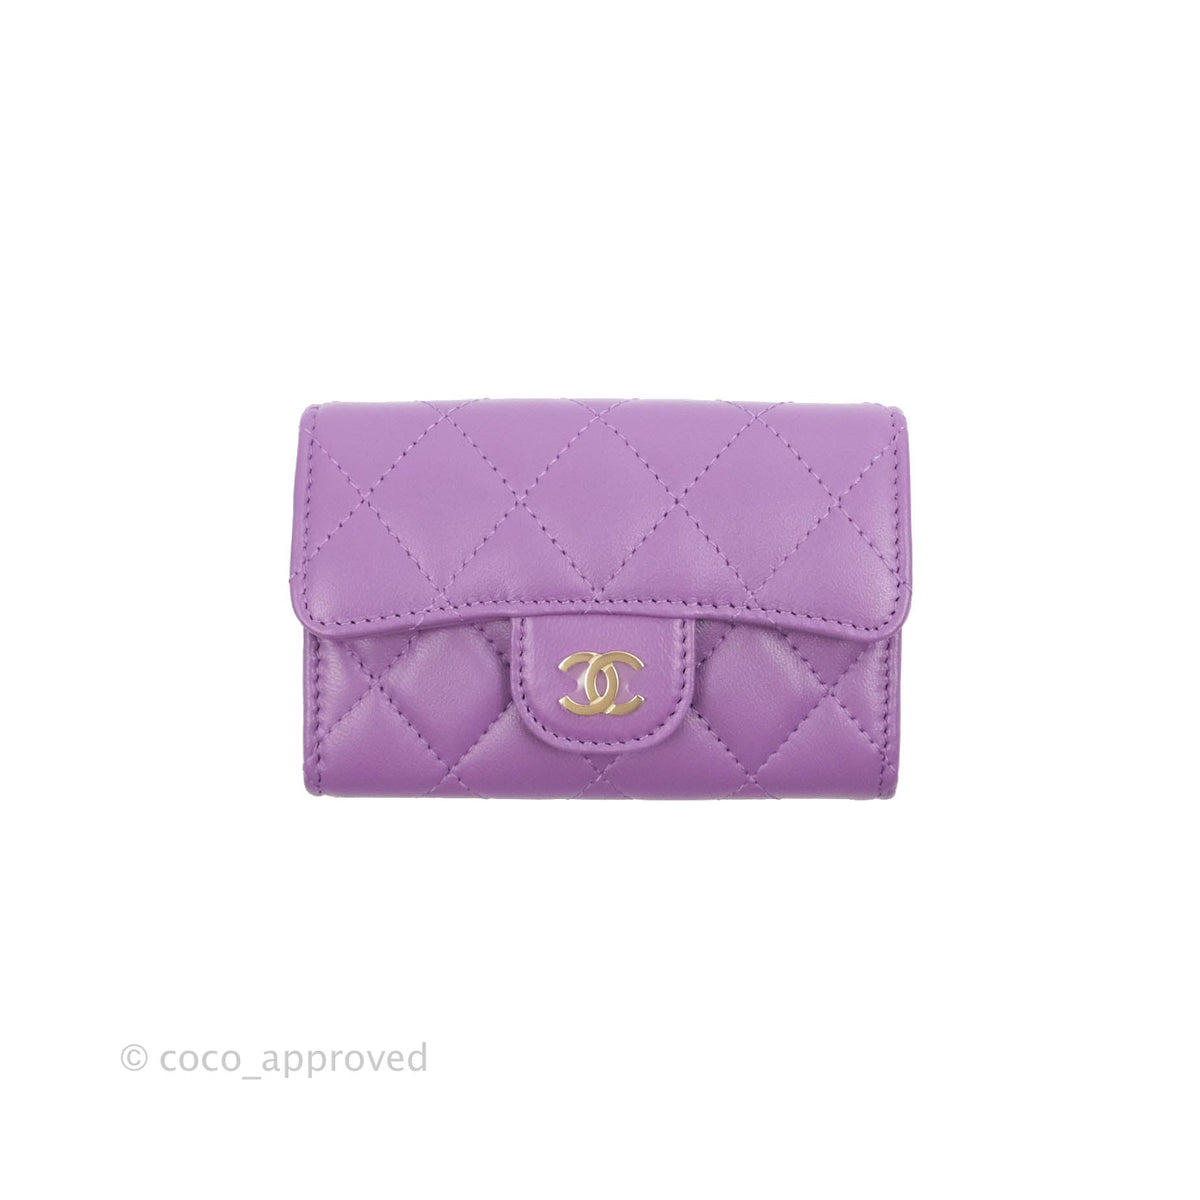 chanel card holder purple